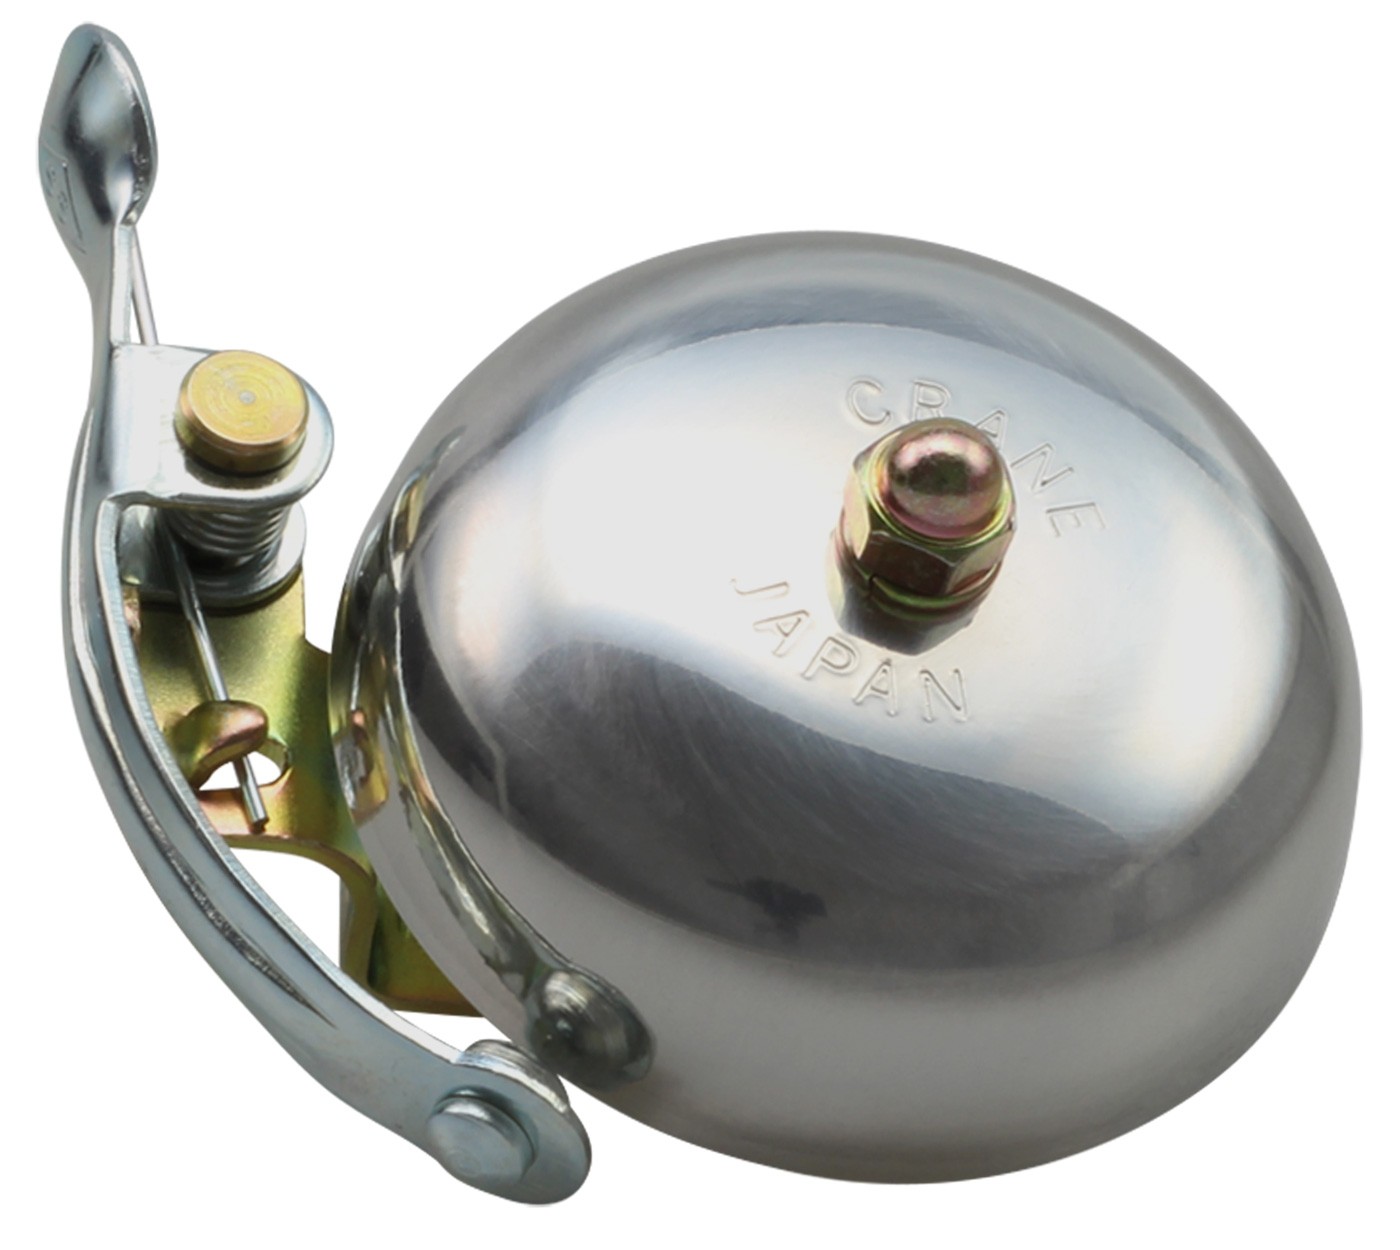 Crane Bell Co. Suzu Klingel Glocke Retro Design silber poliert silver polished